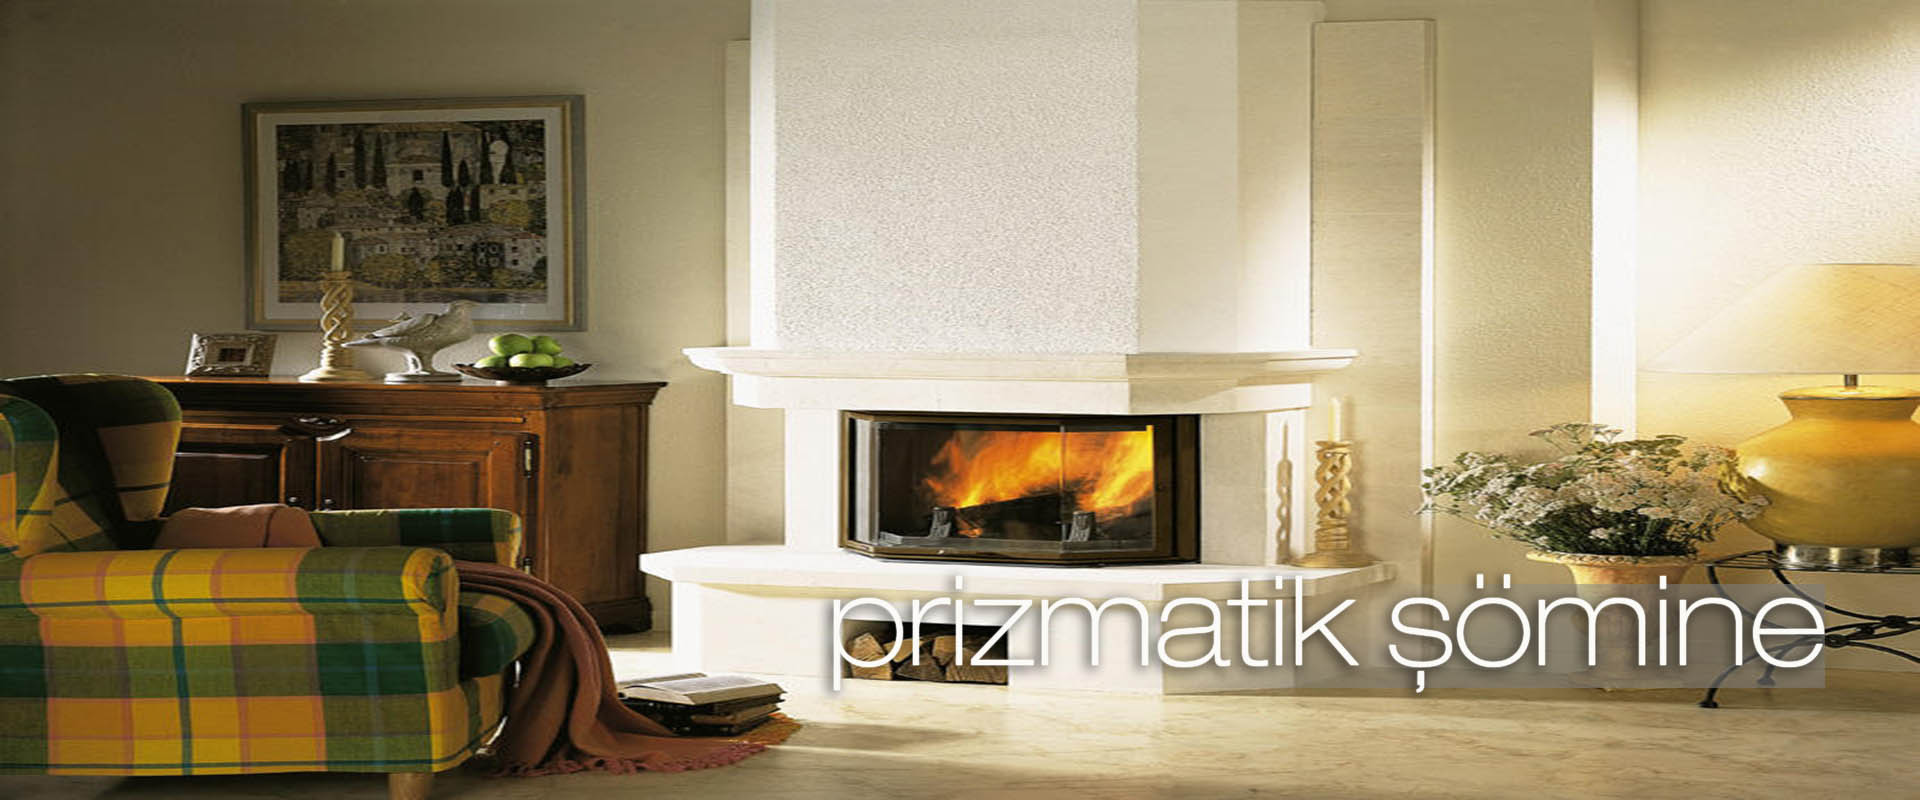 Green interior fireplace modern atmospheric lounge living room